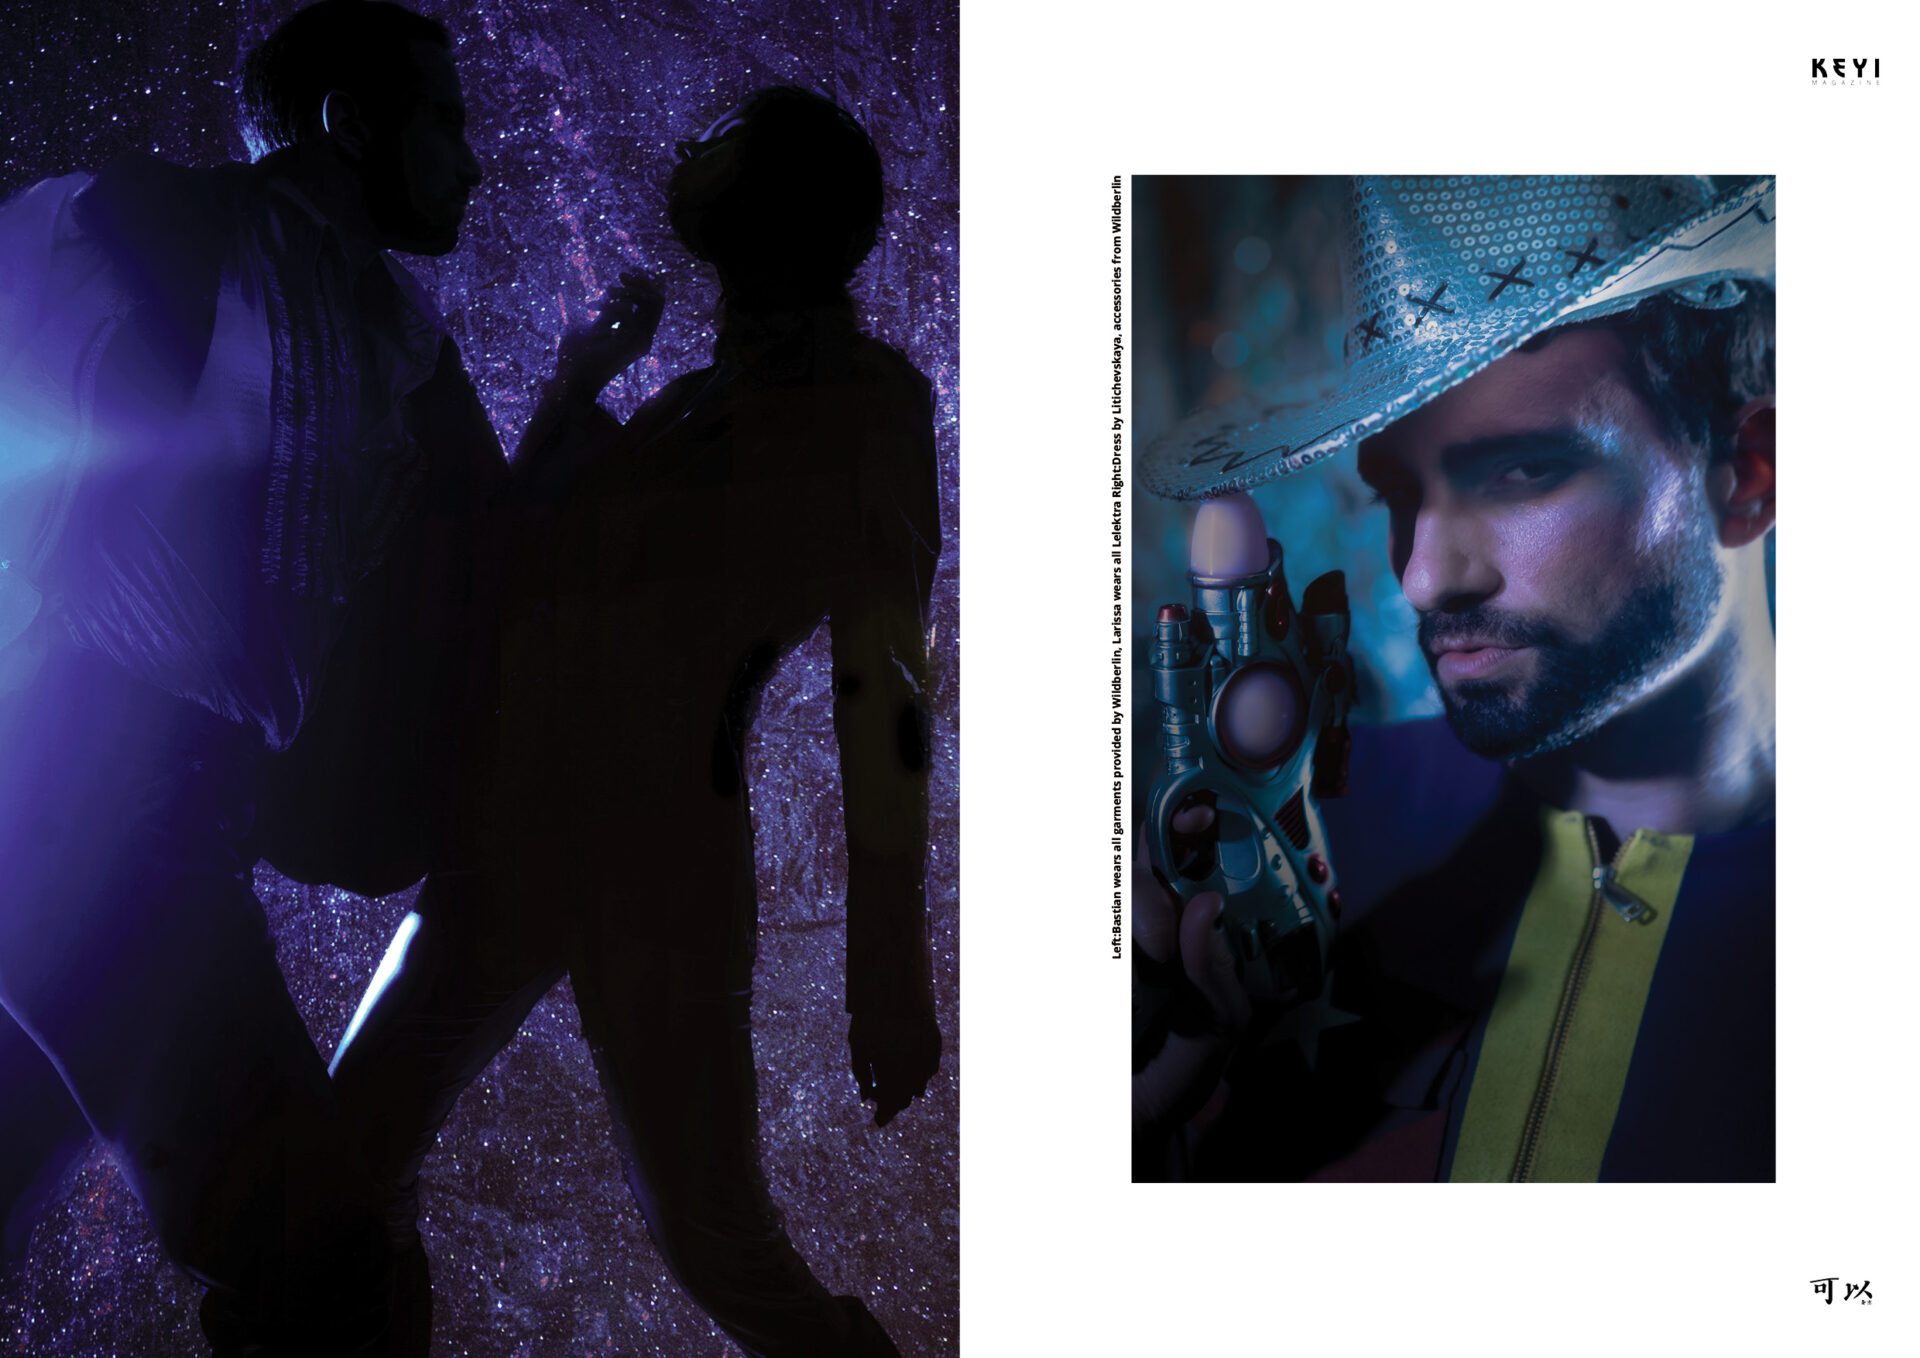 "Space Cowboys" by Joel Ivan Thomas with Larissa Matheus & Bastian Castillo. Styling by Lisa Eisert. Make up by Carmen Meyer